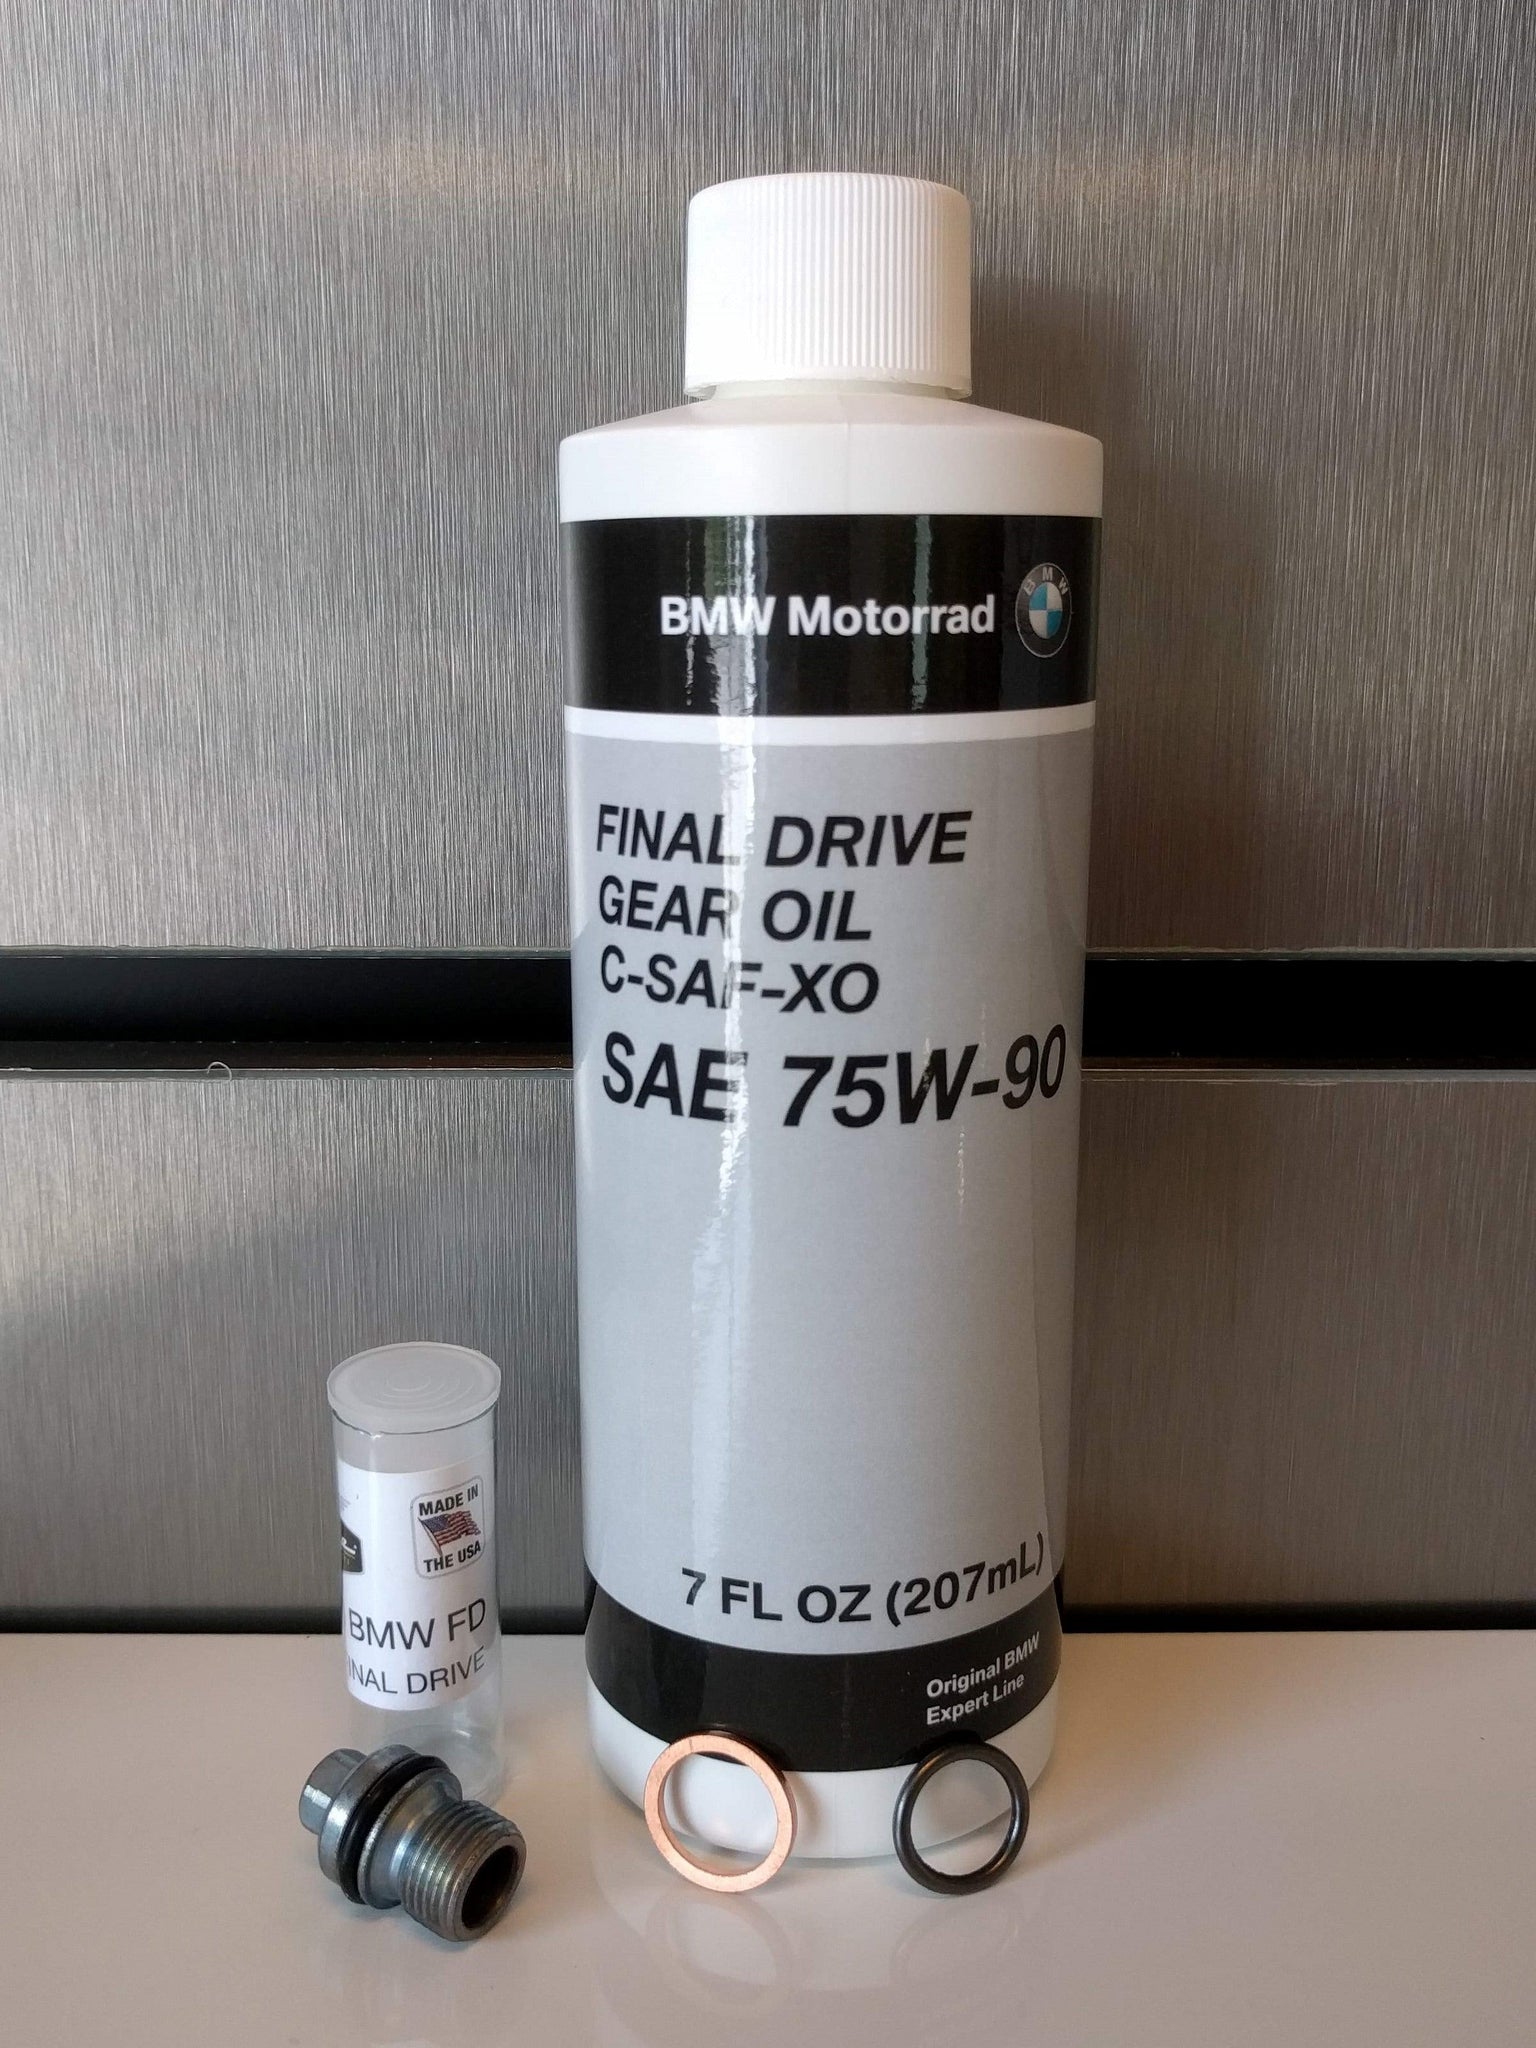 Final Drive Gear Oil Dispenser Bottle